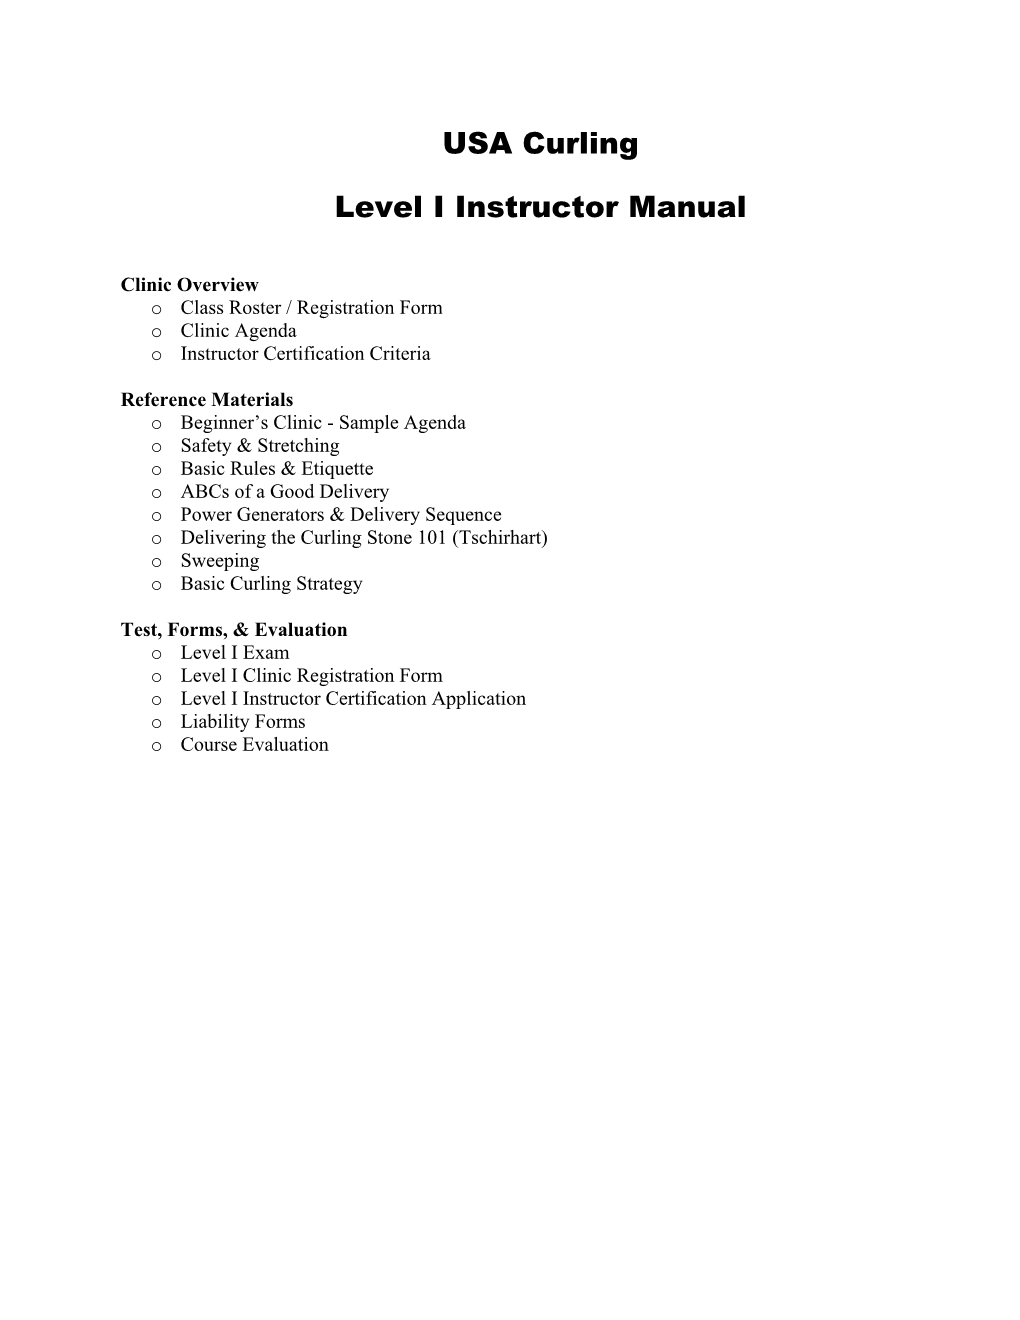 USA Curling Level I Instructor Manual